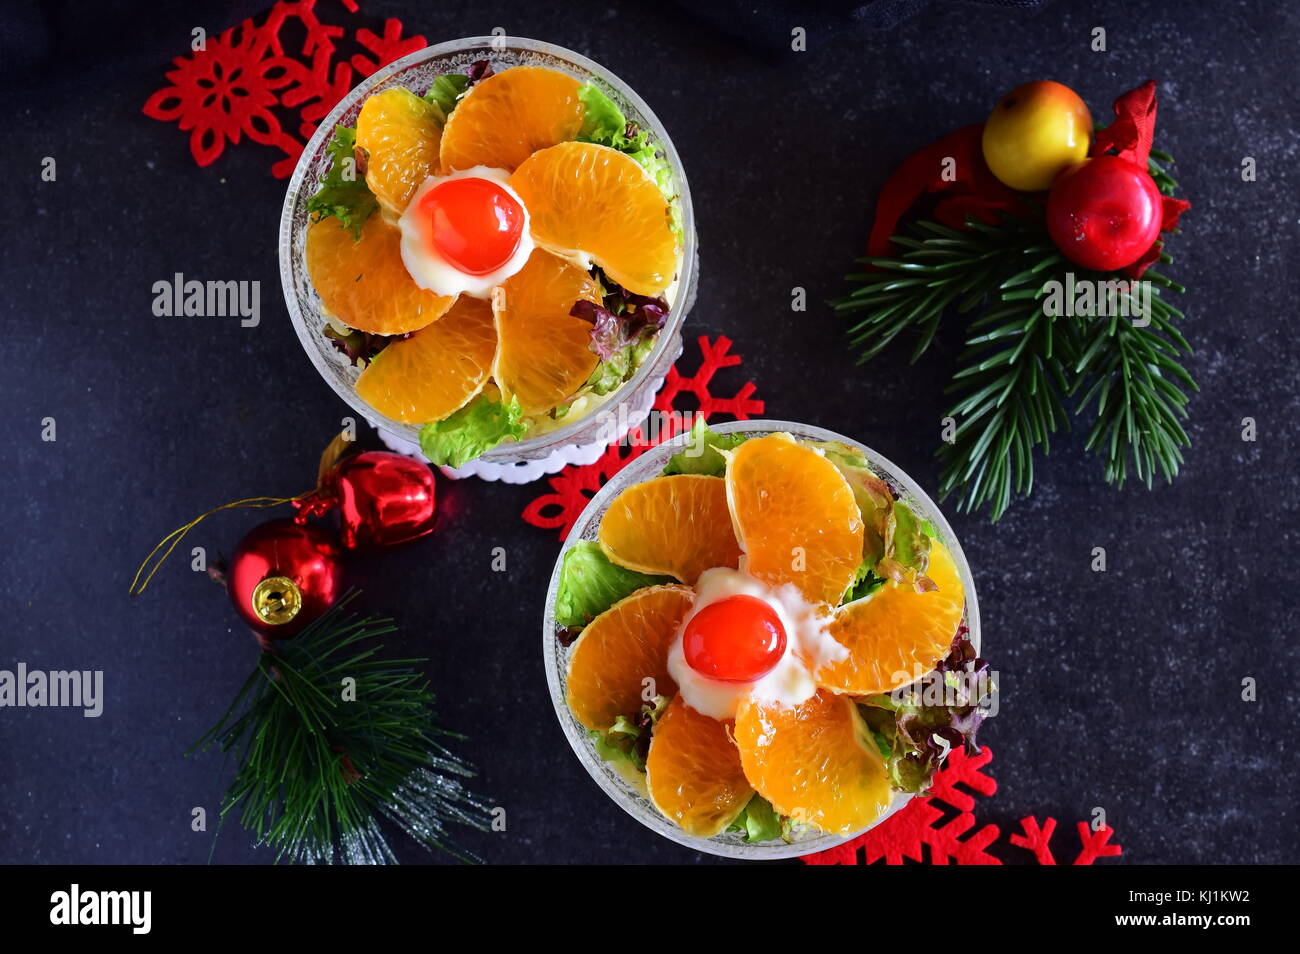 Fresh salad with chicken, banana, cheese, salad leaves,yogurt dressing. Christmas decoration, Holidays New year Stock Photo